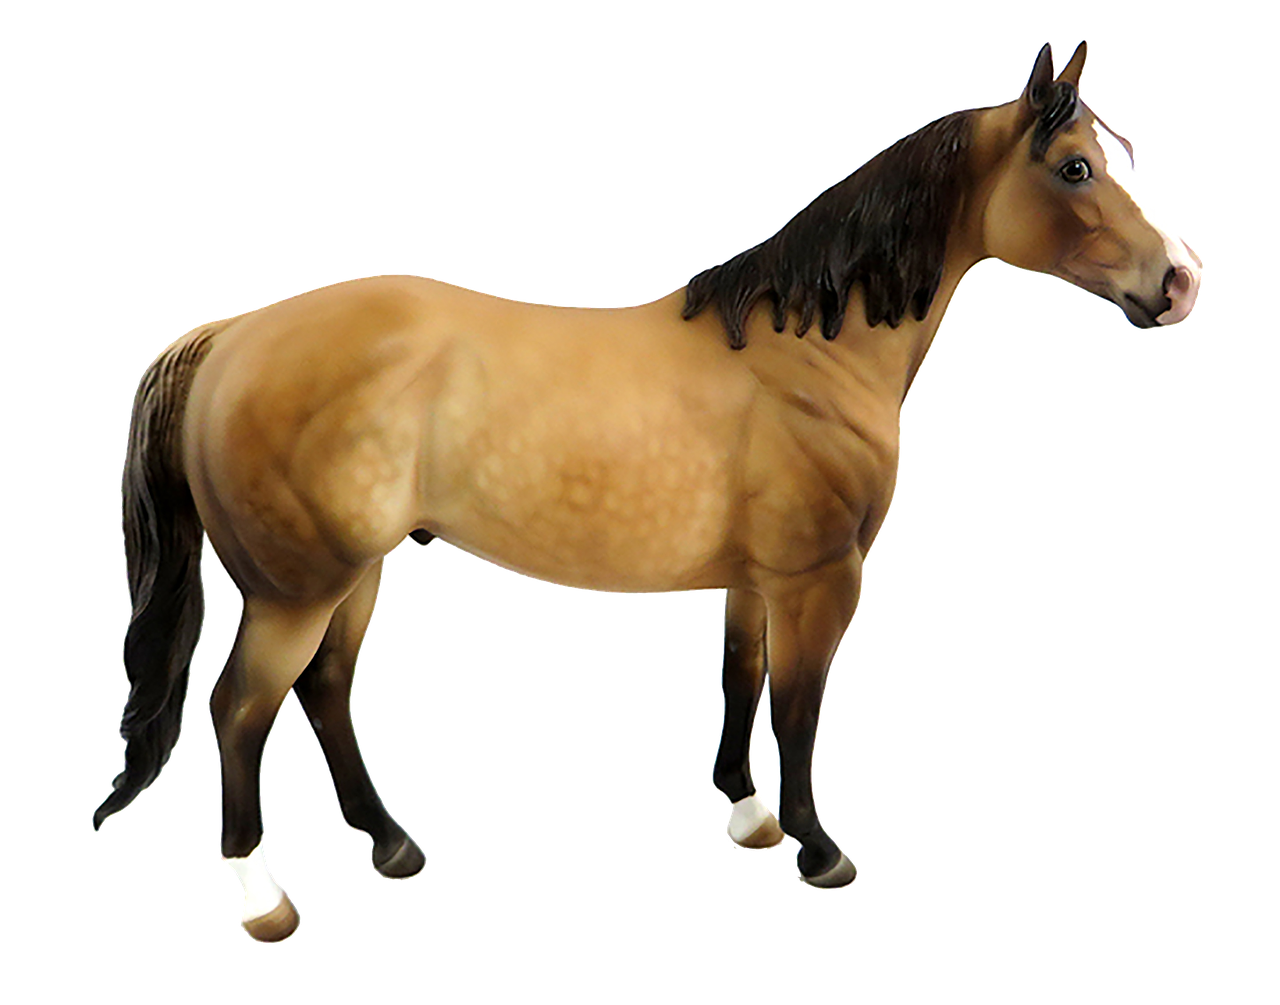 Imagen Transparente de caballo marrón de pie